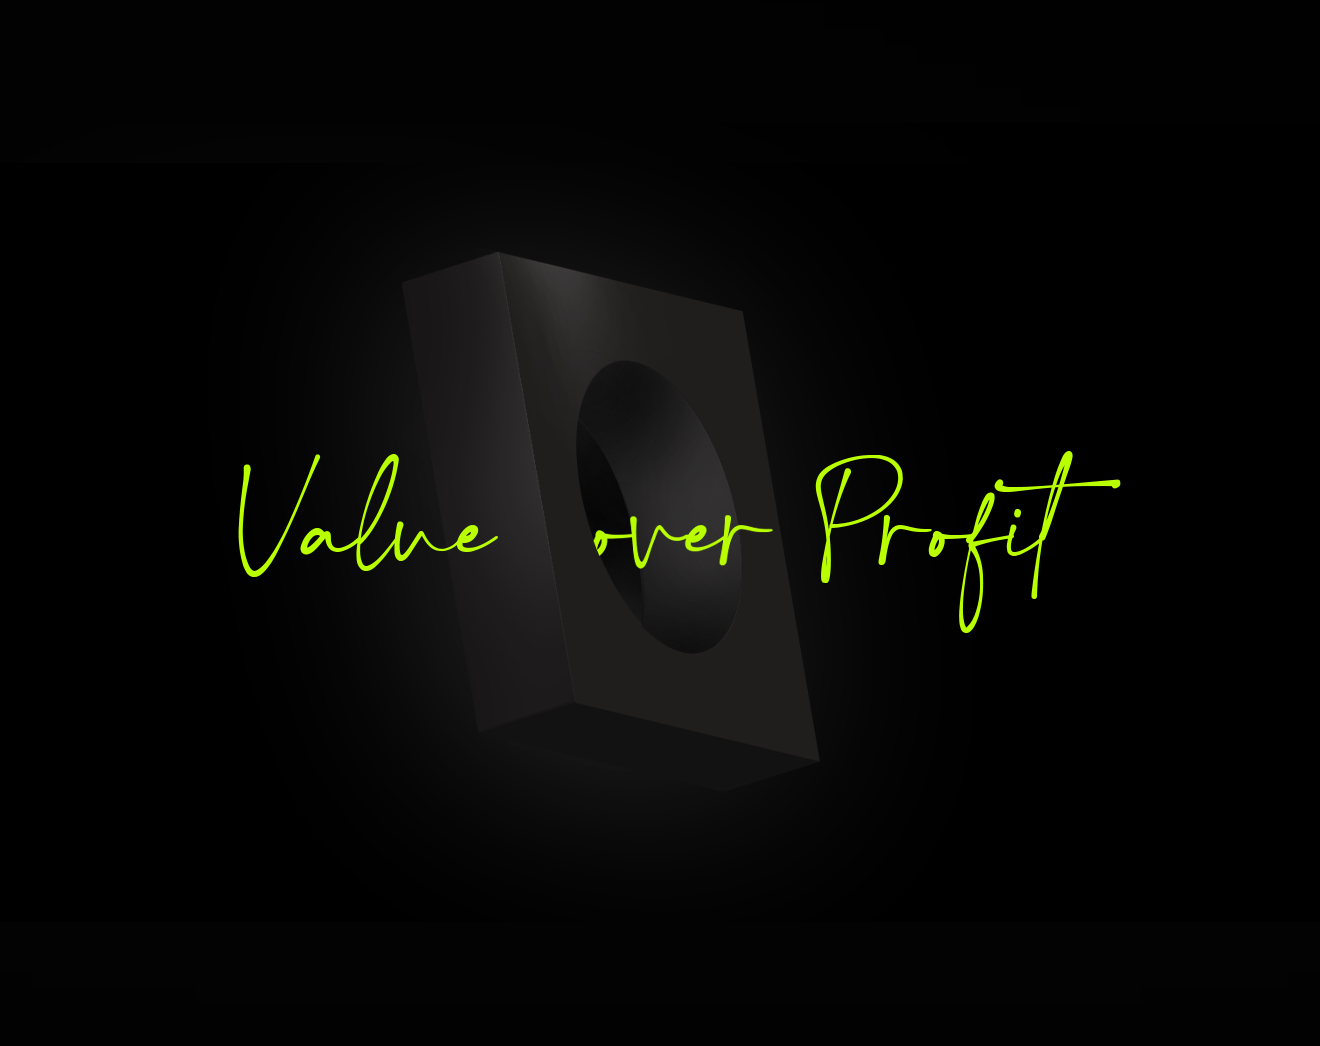 Value over profit - Creative branding agency in Dubai - Moonbox